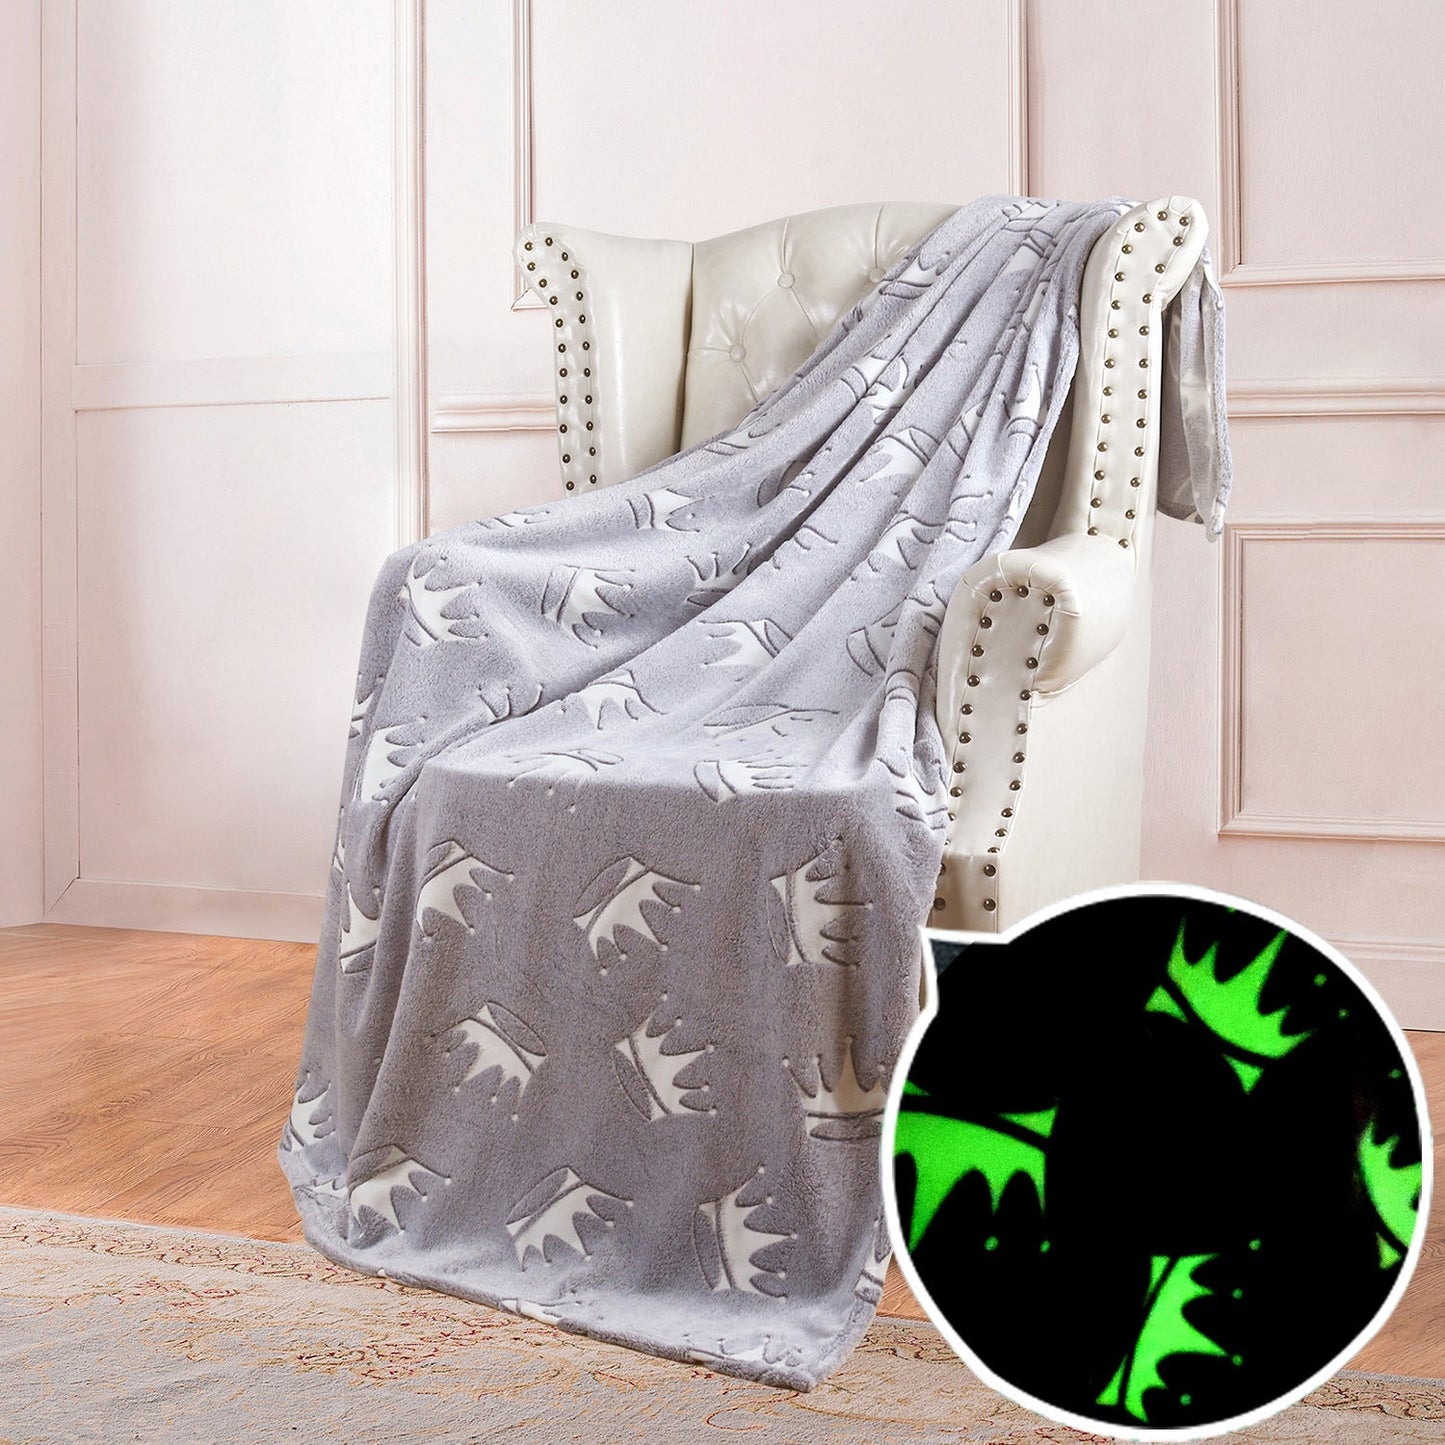 GlowSnug Flannel Comforter